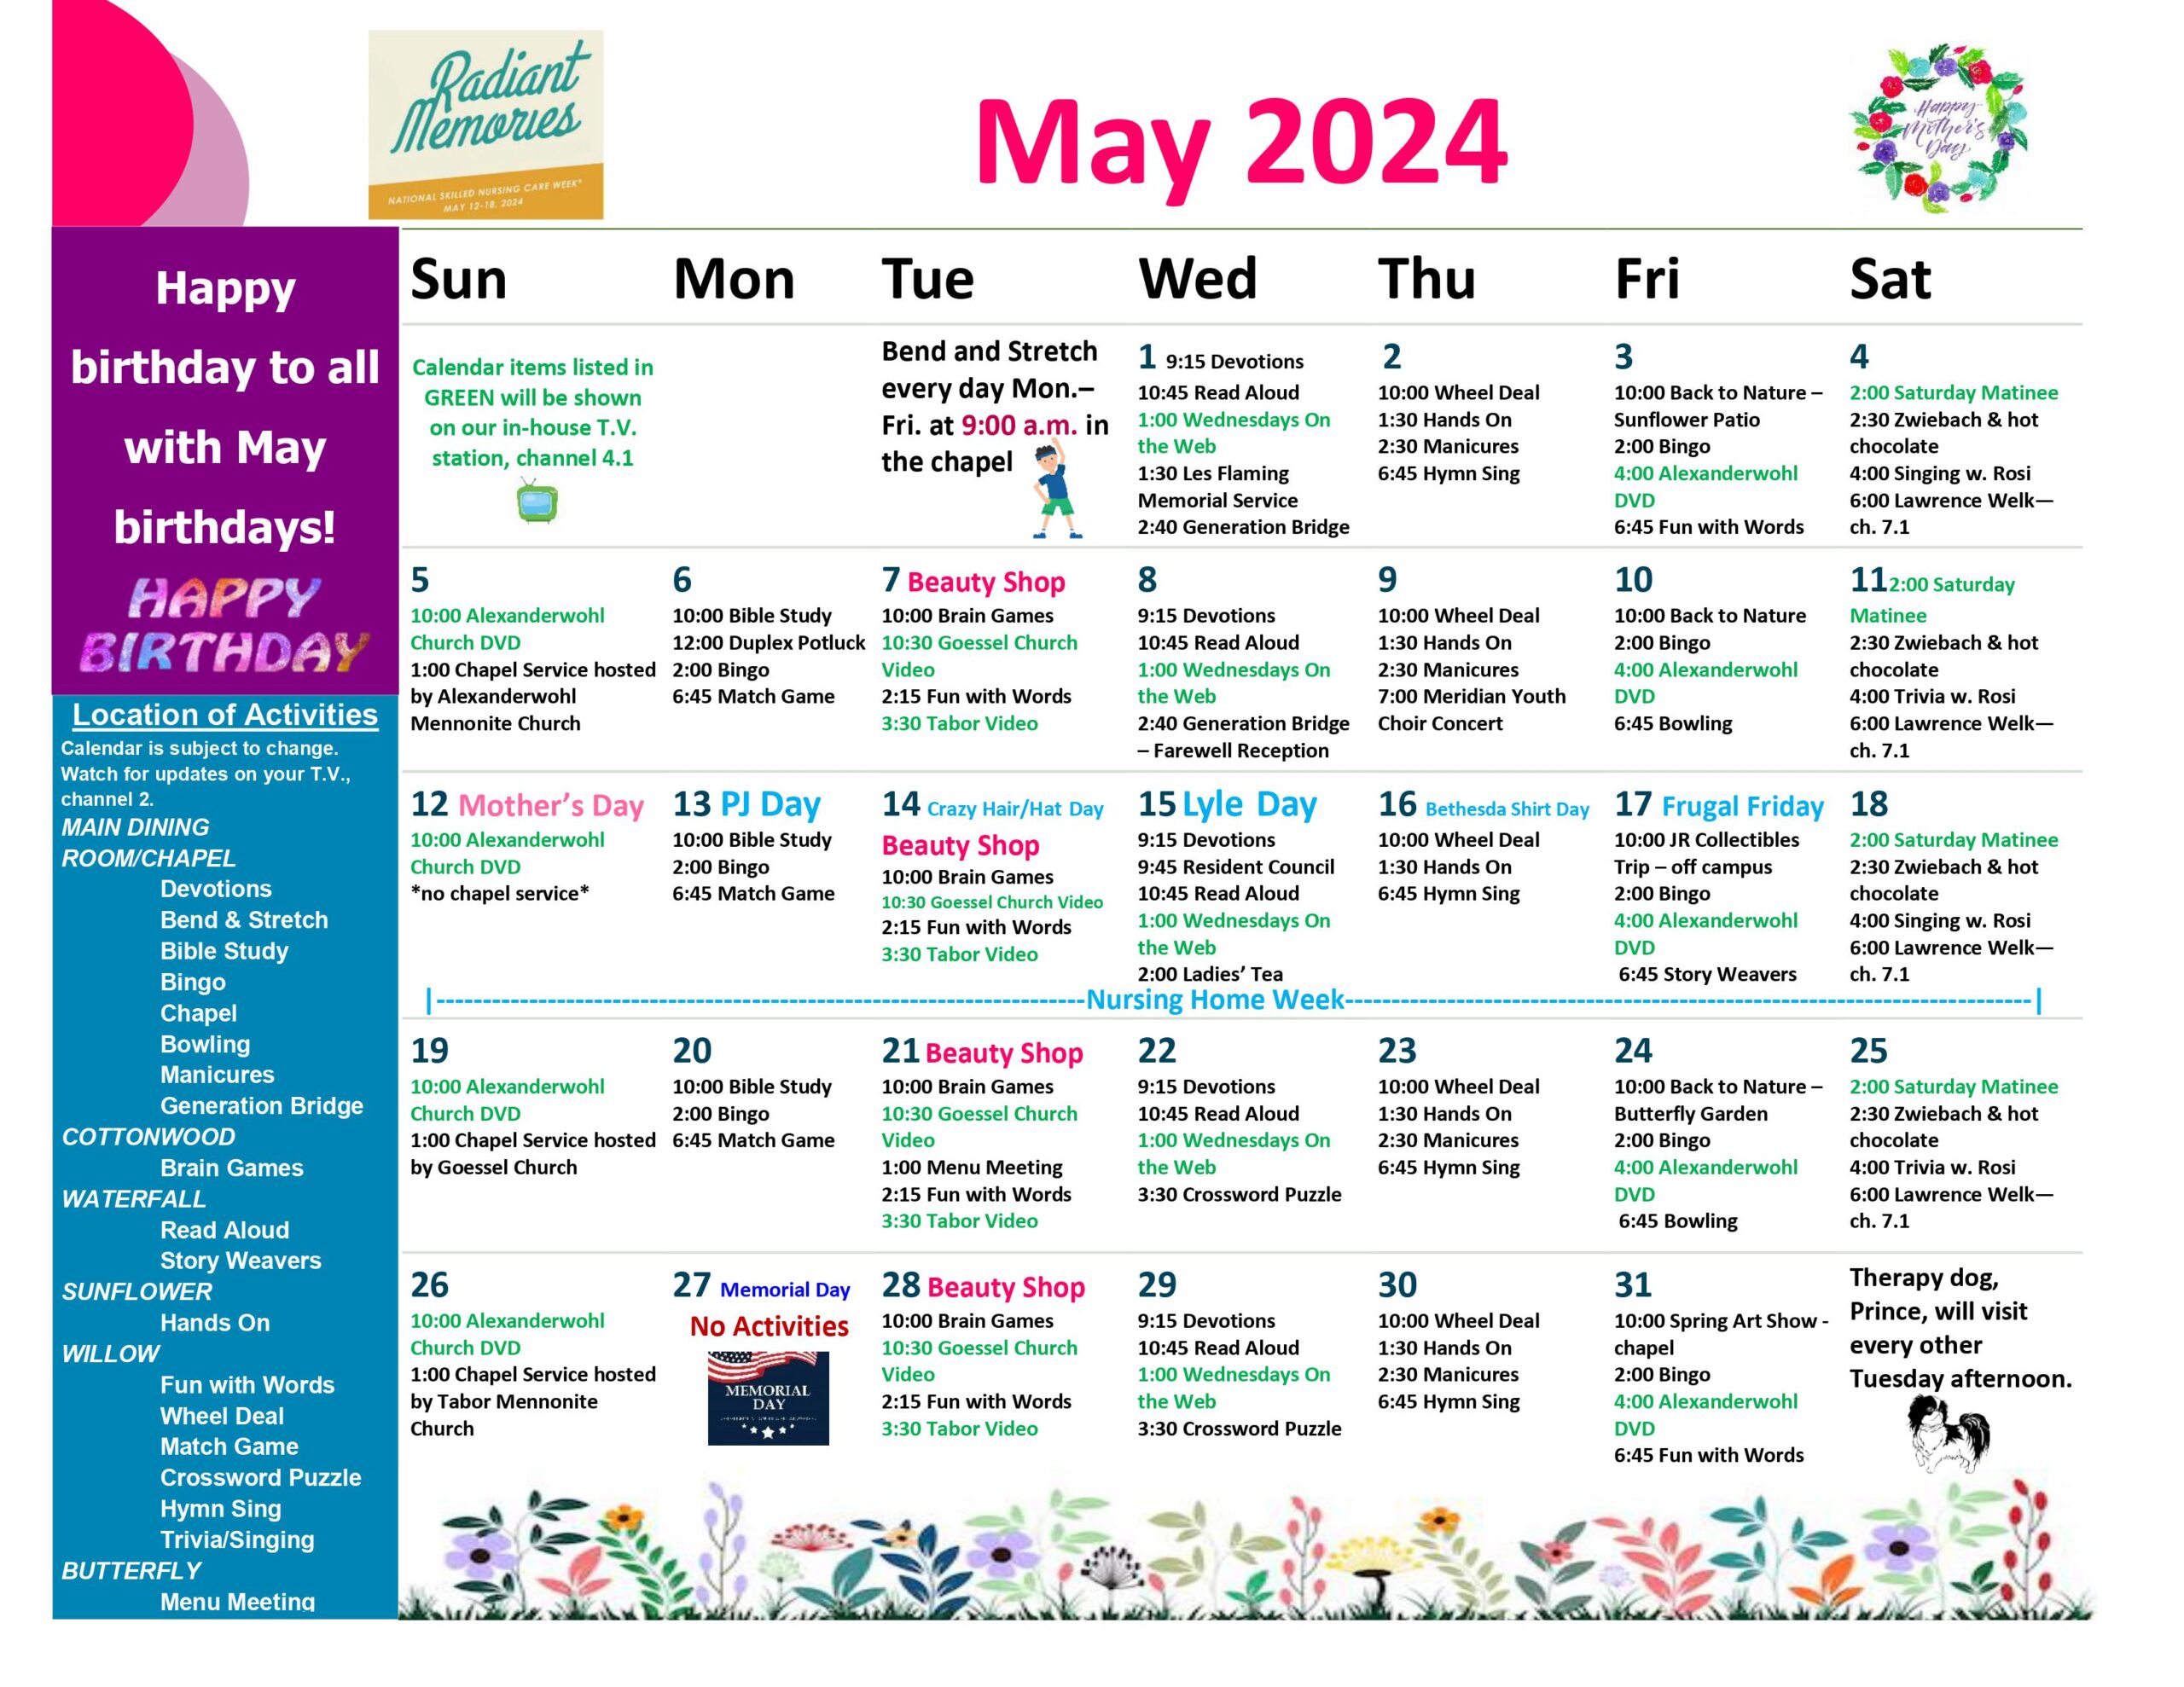 May 2024 activity calendar